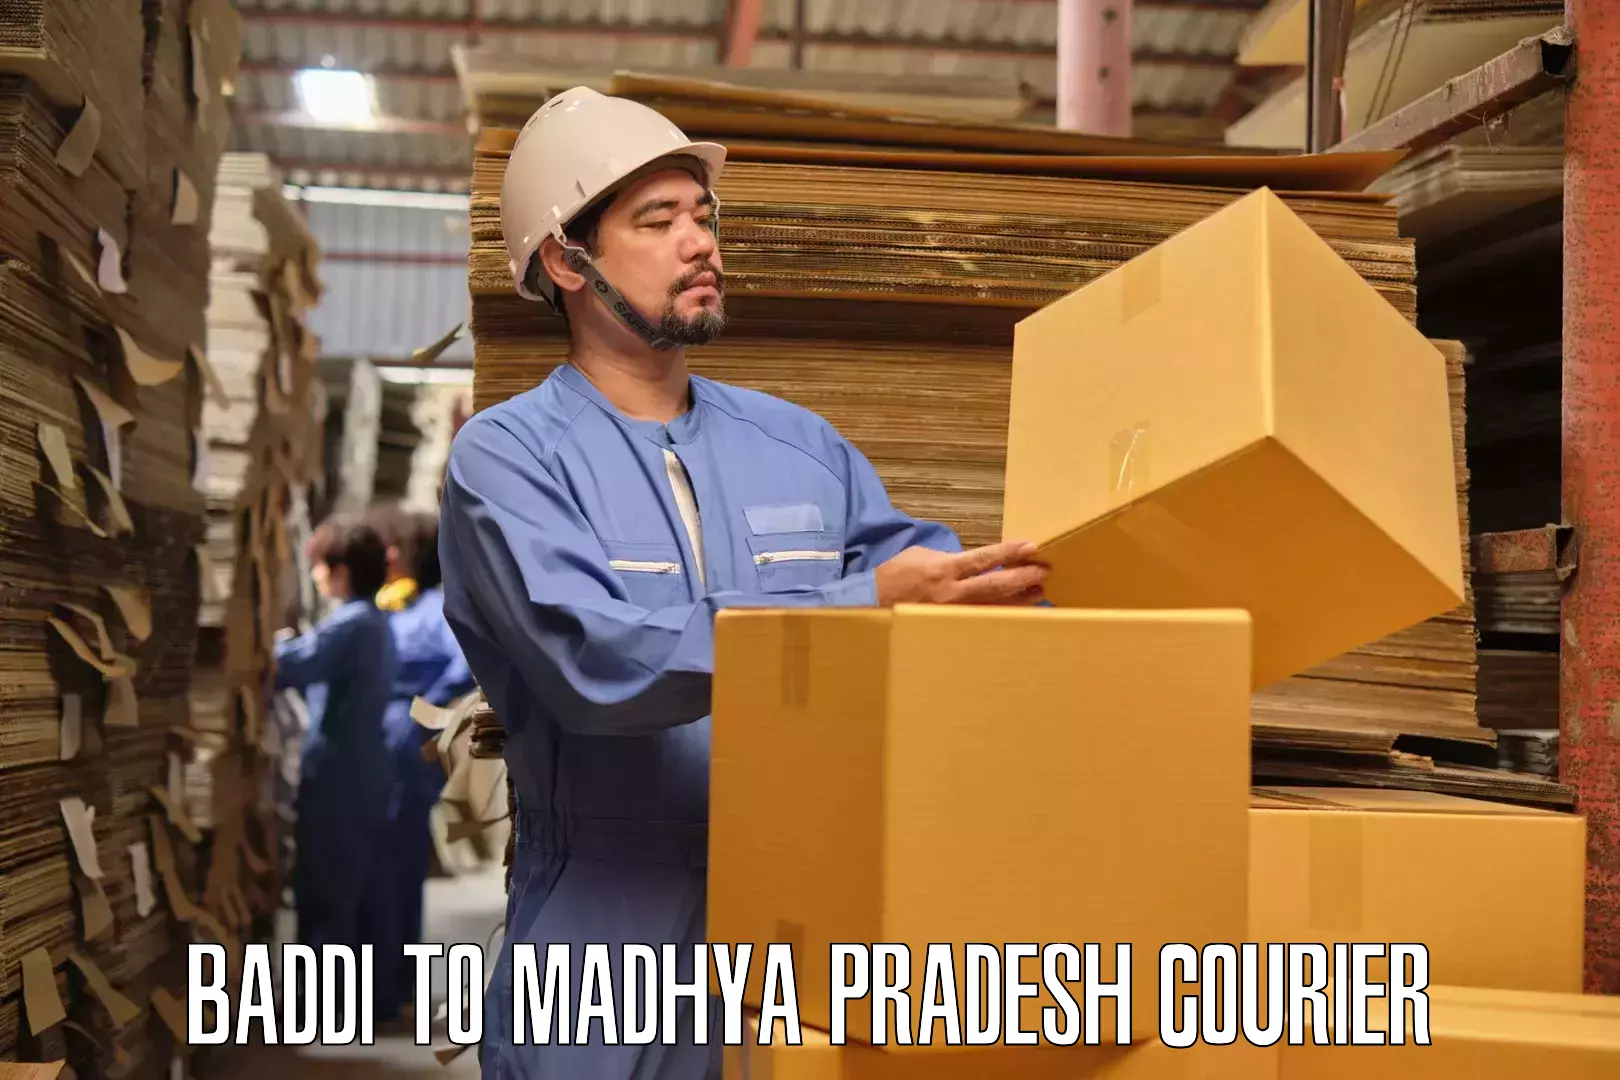 Furniture delivery service Baddi to Lakhnadon